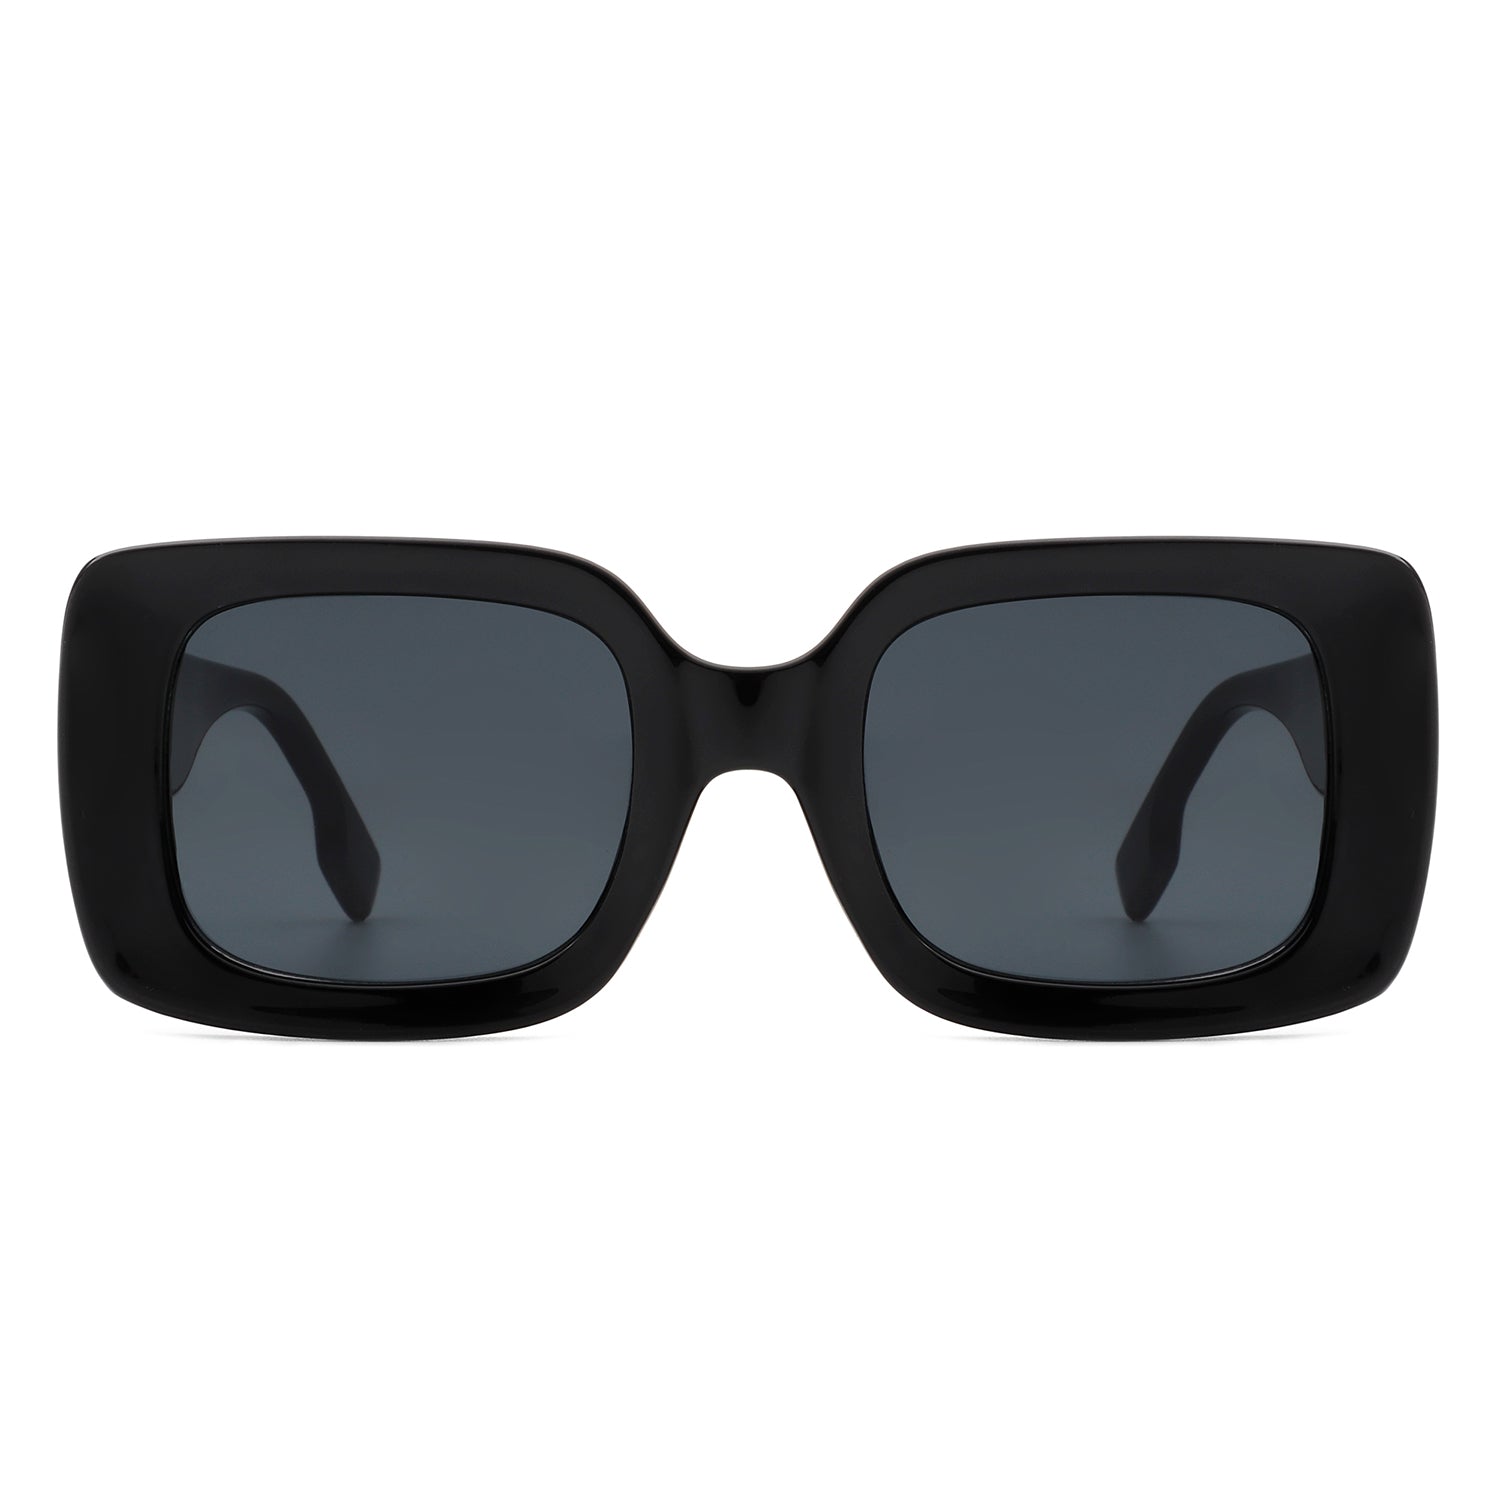 HS1139 - Square Retro Flat Top Fashion Sunglasses